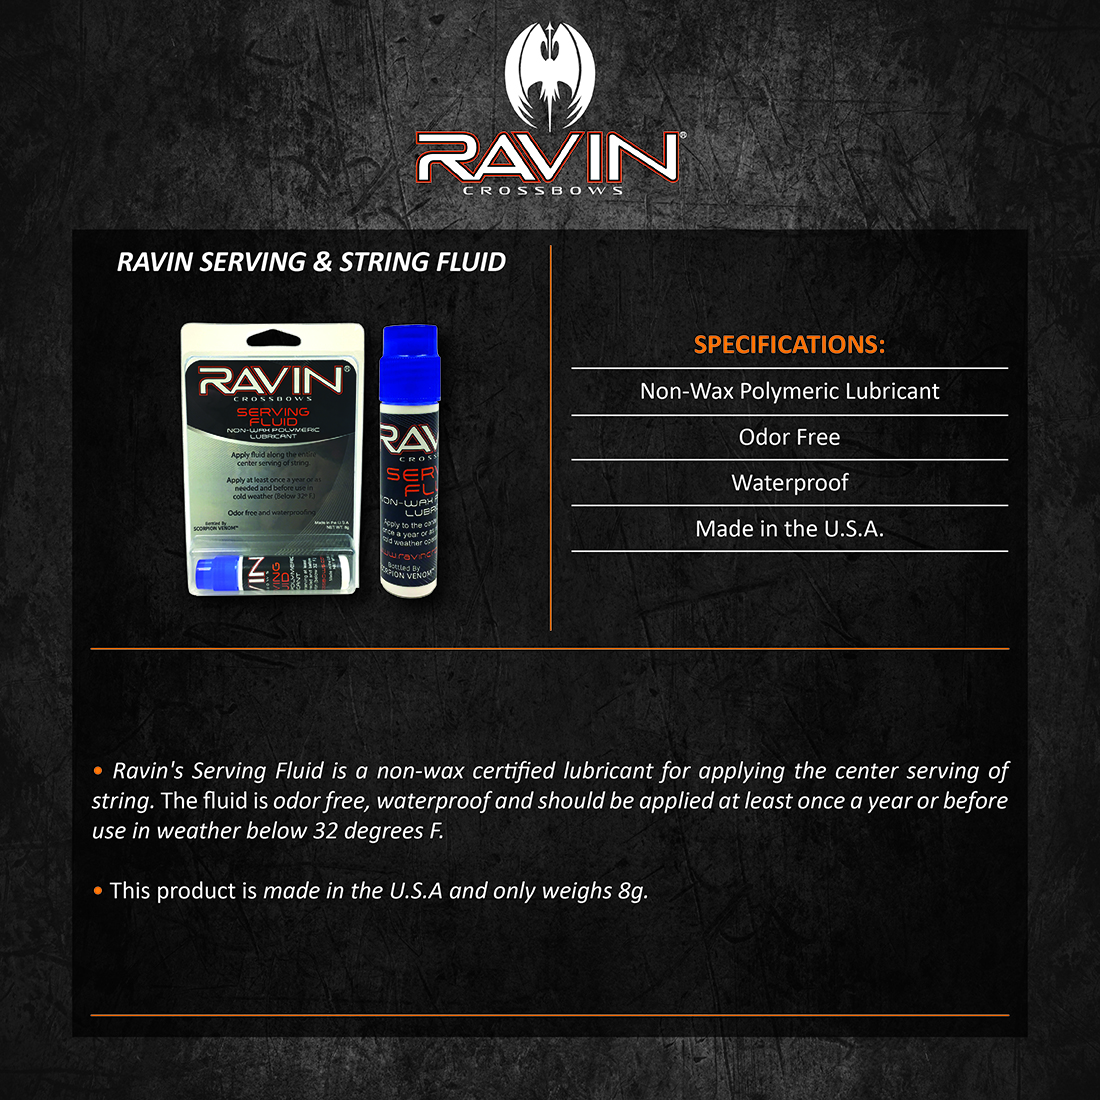 Ravin_Serving_and_String_Fluid_Product_Description